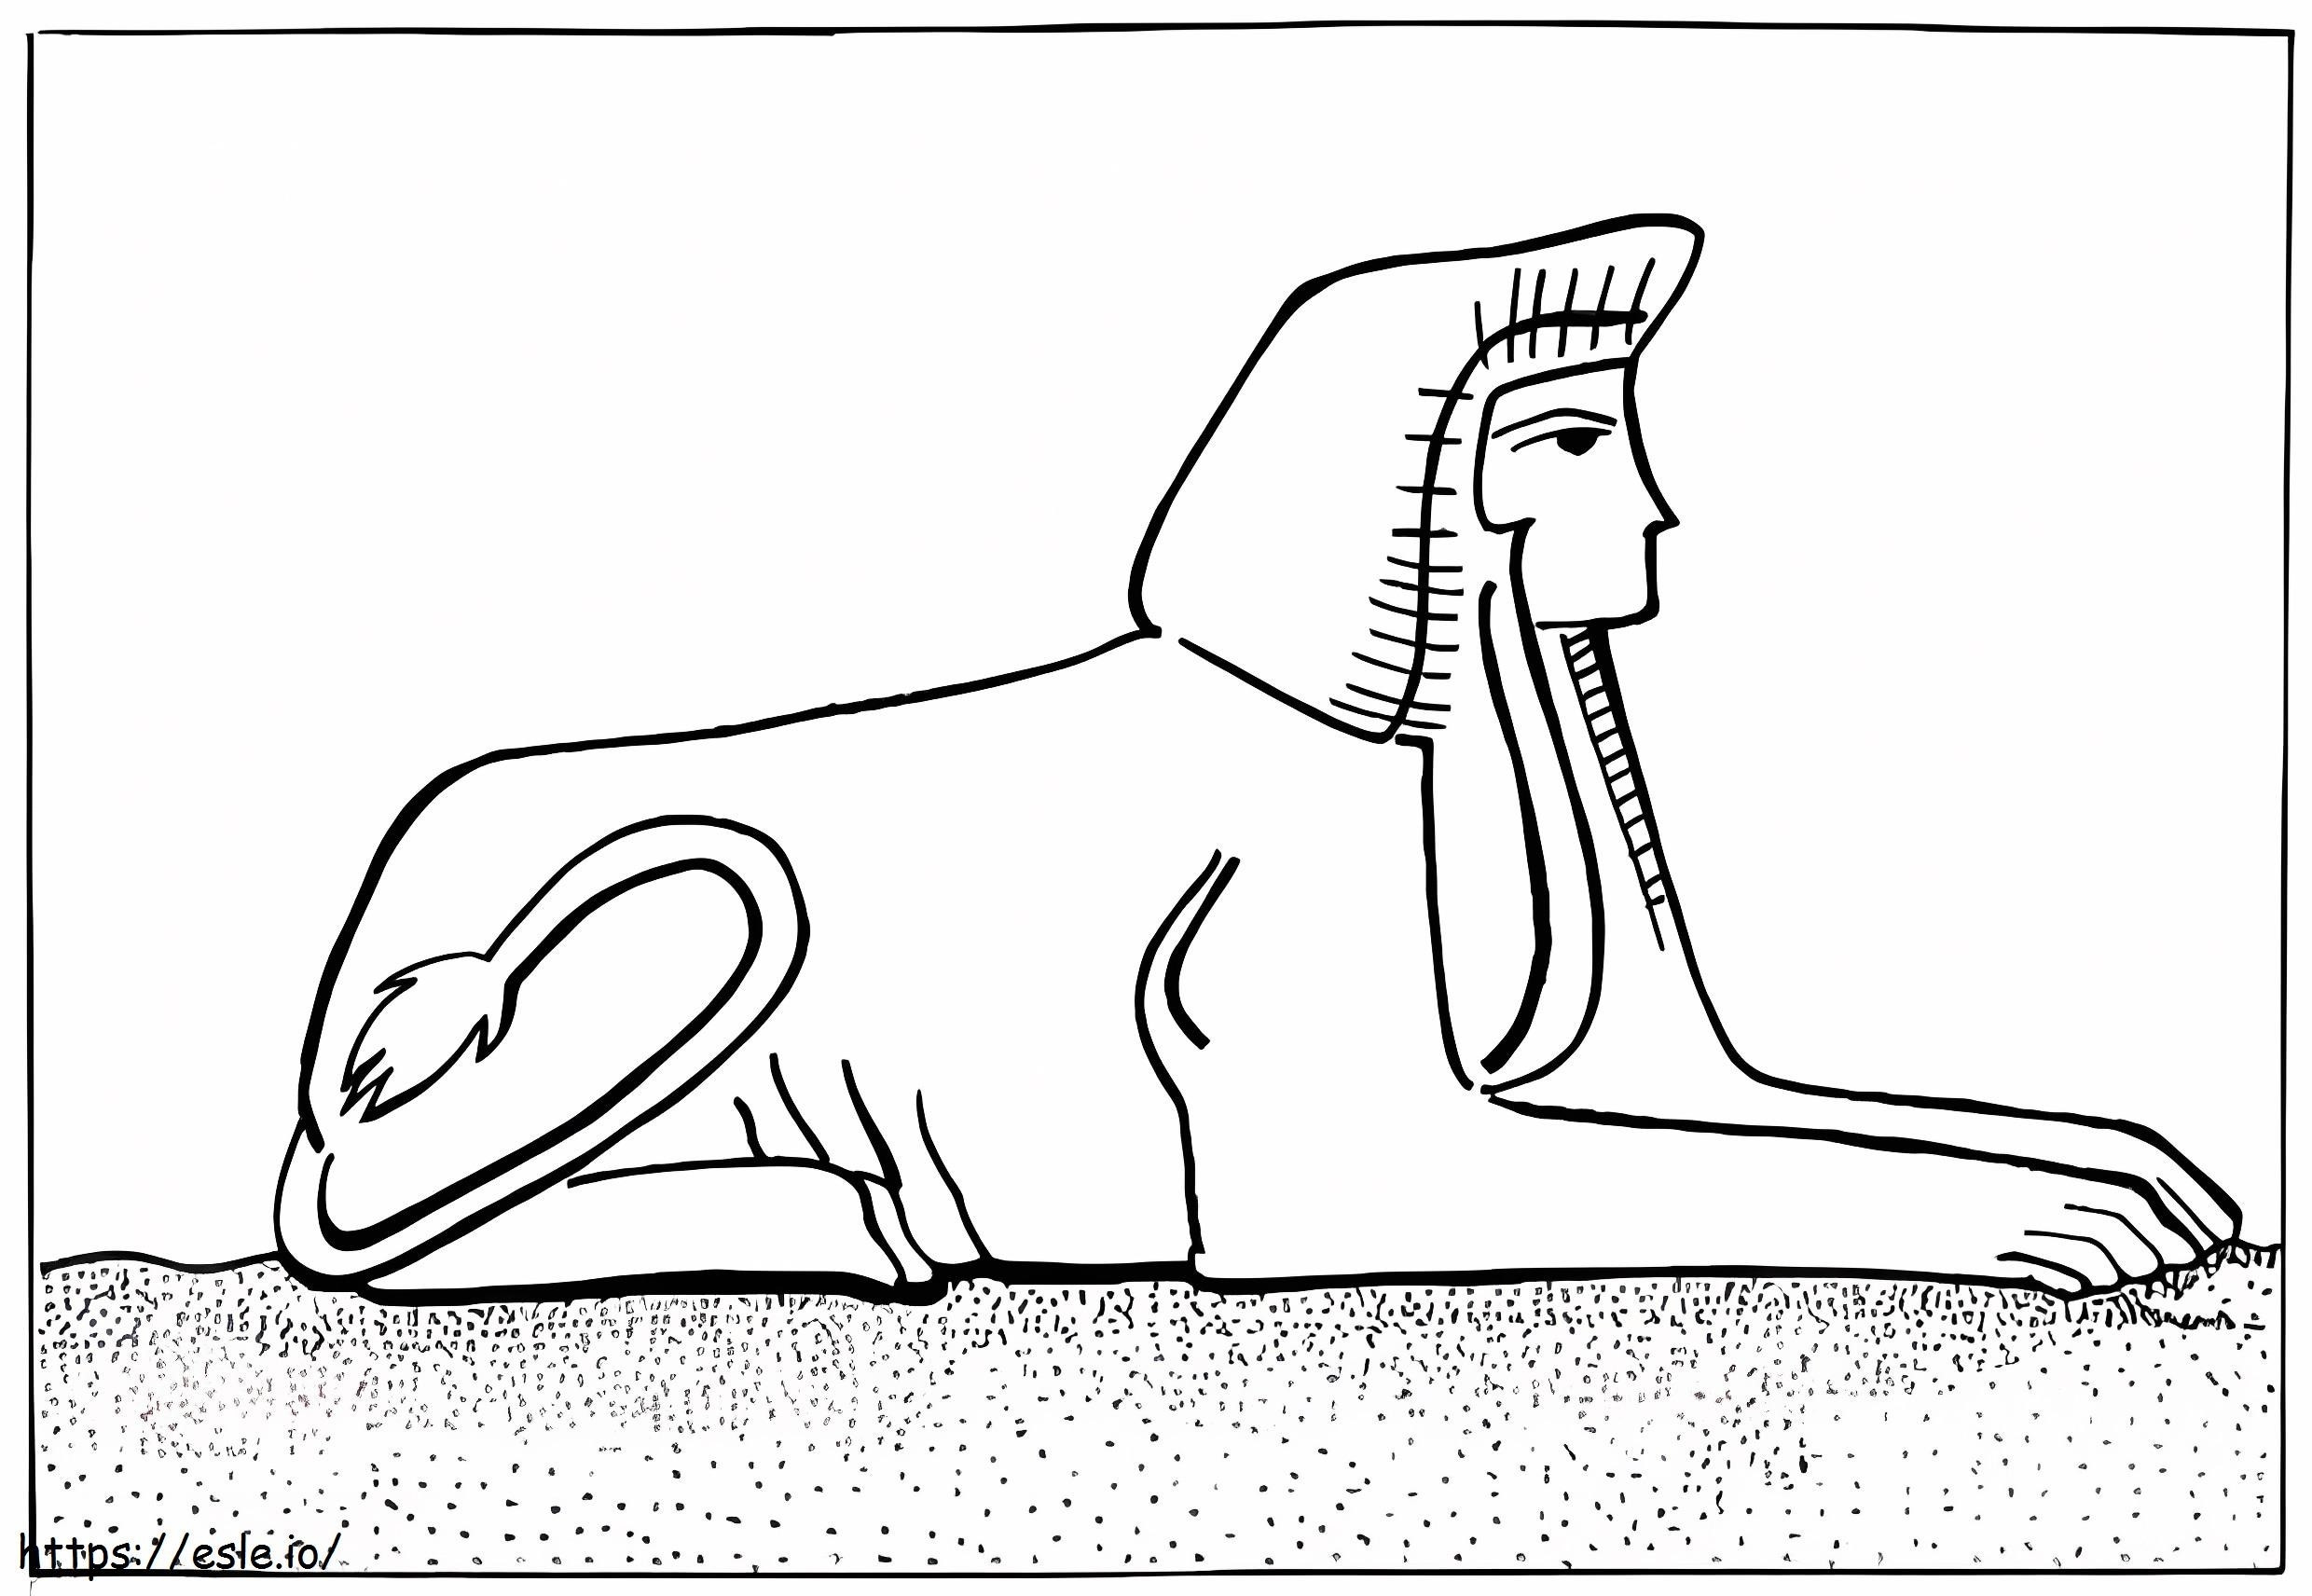 Sphinx 1 coloring page